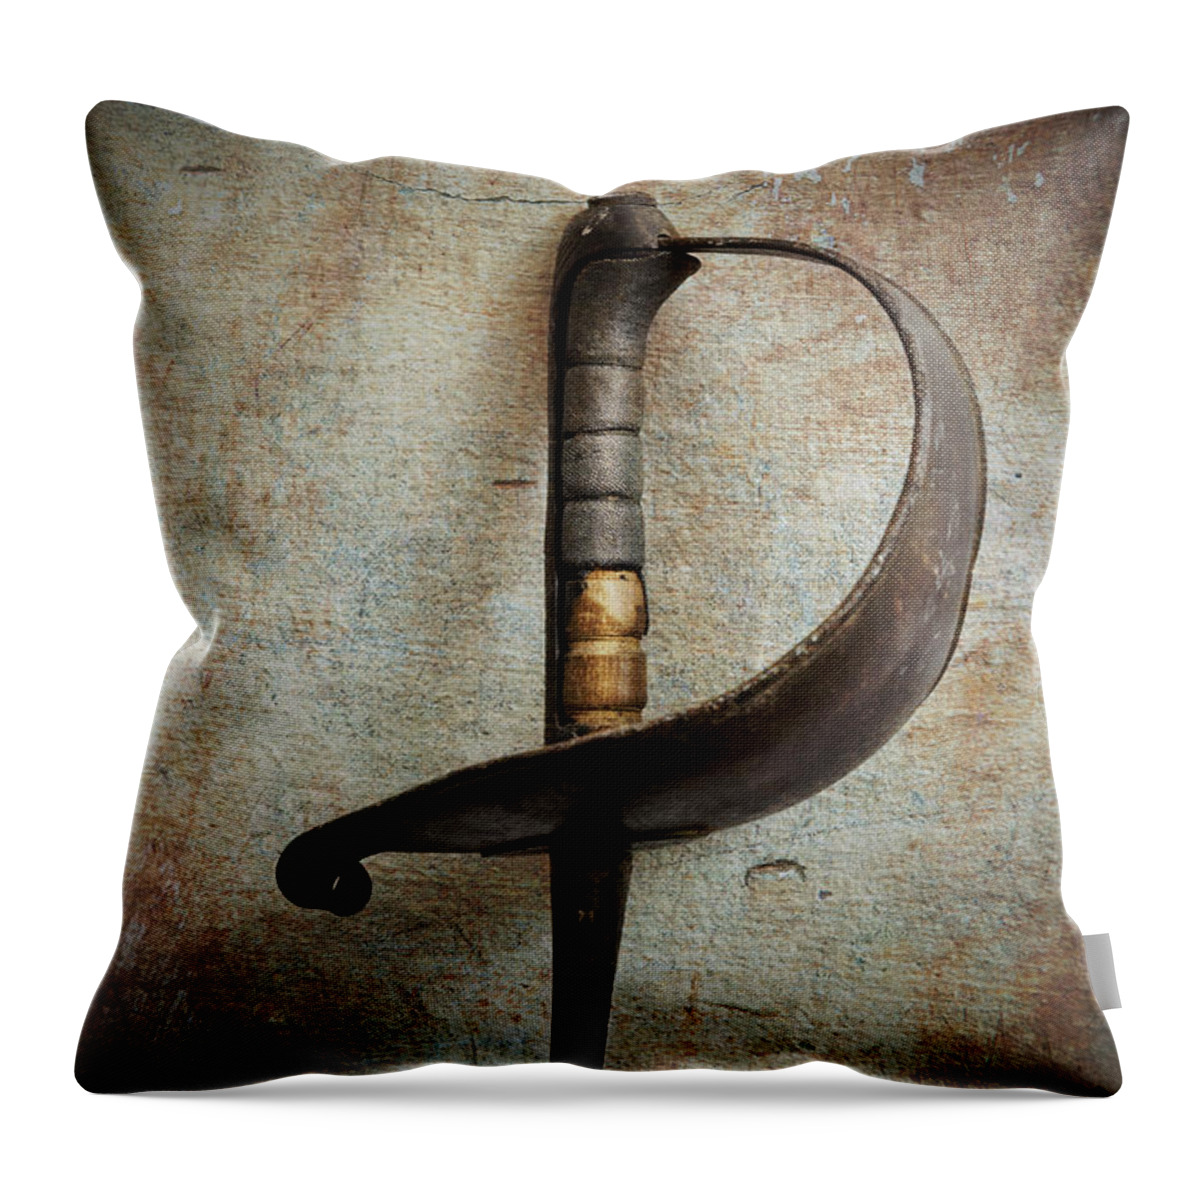 Sword Throw Pillow featuring the photograph Sword by Jelena Jovanovic